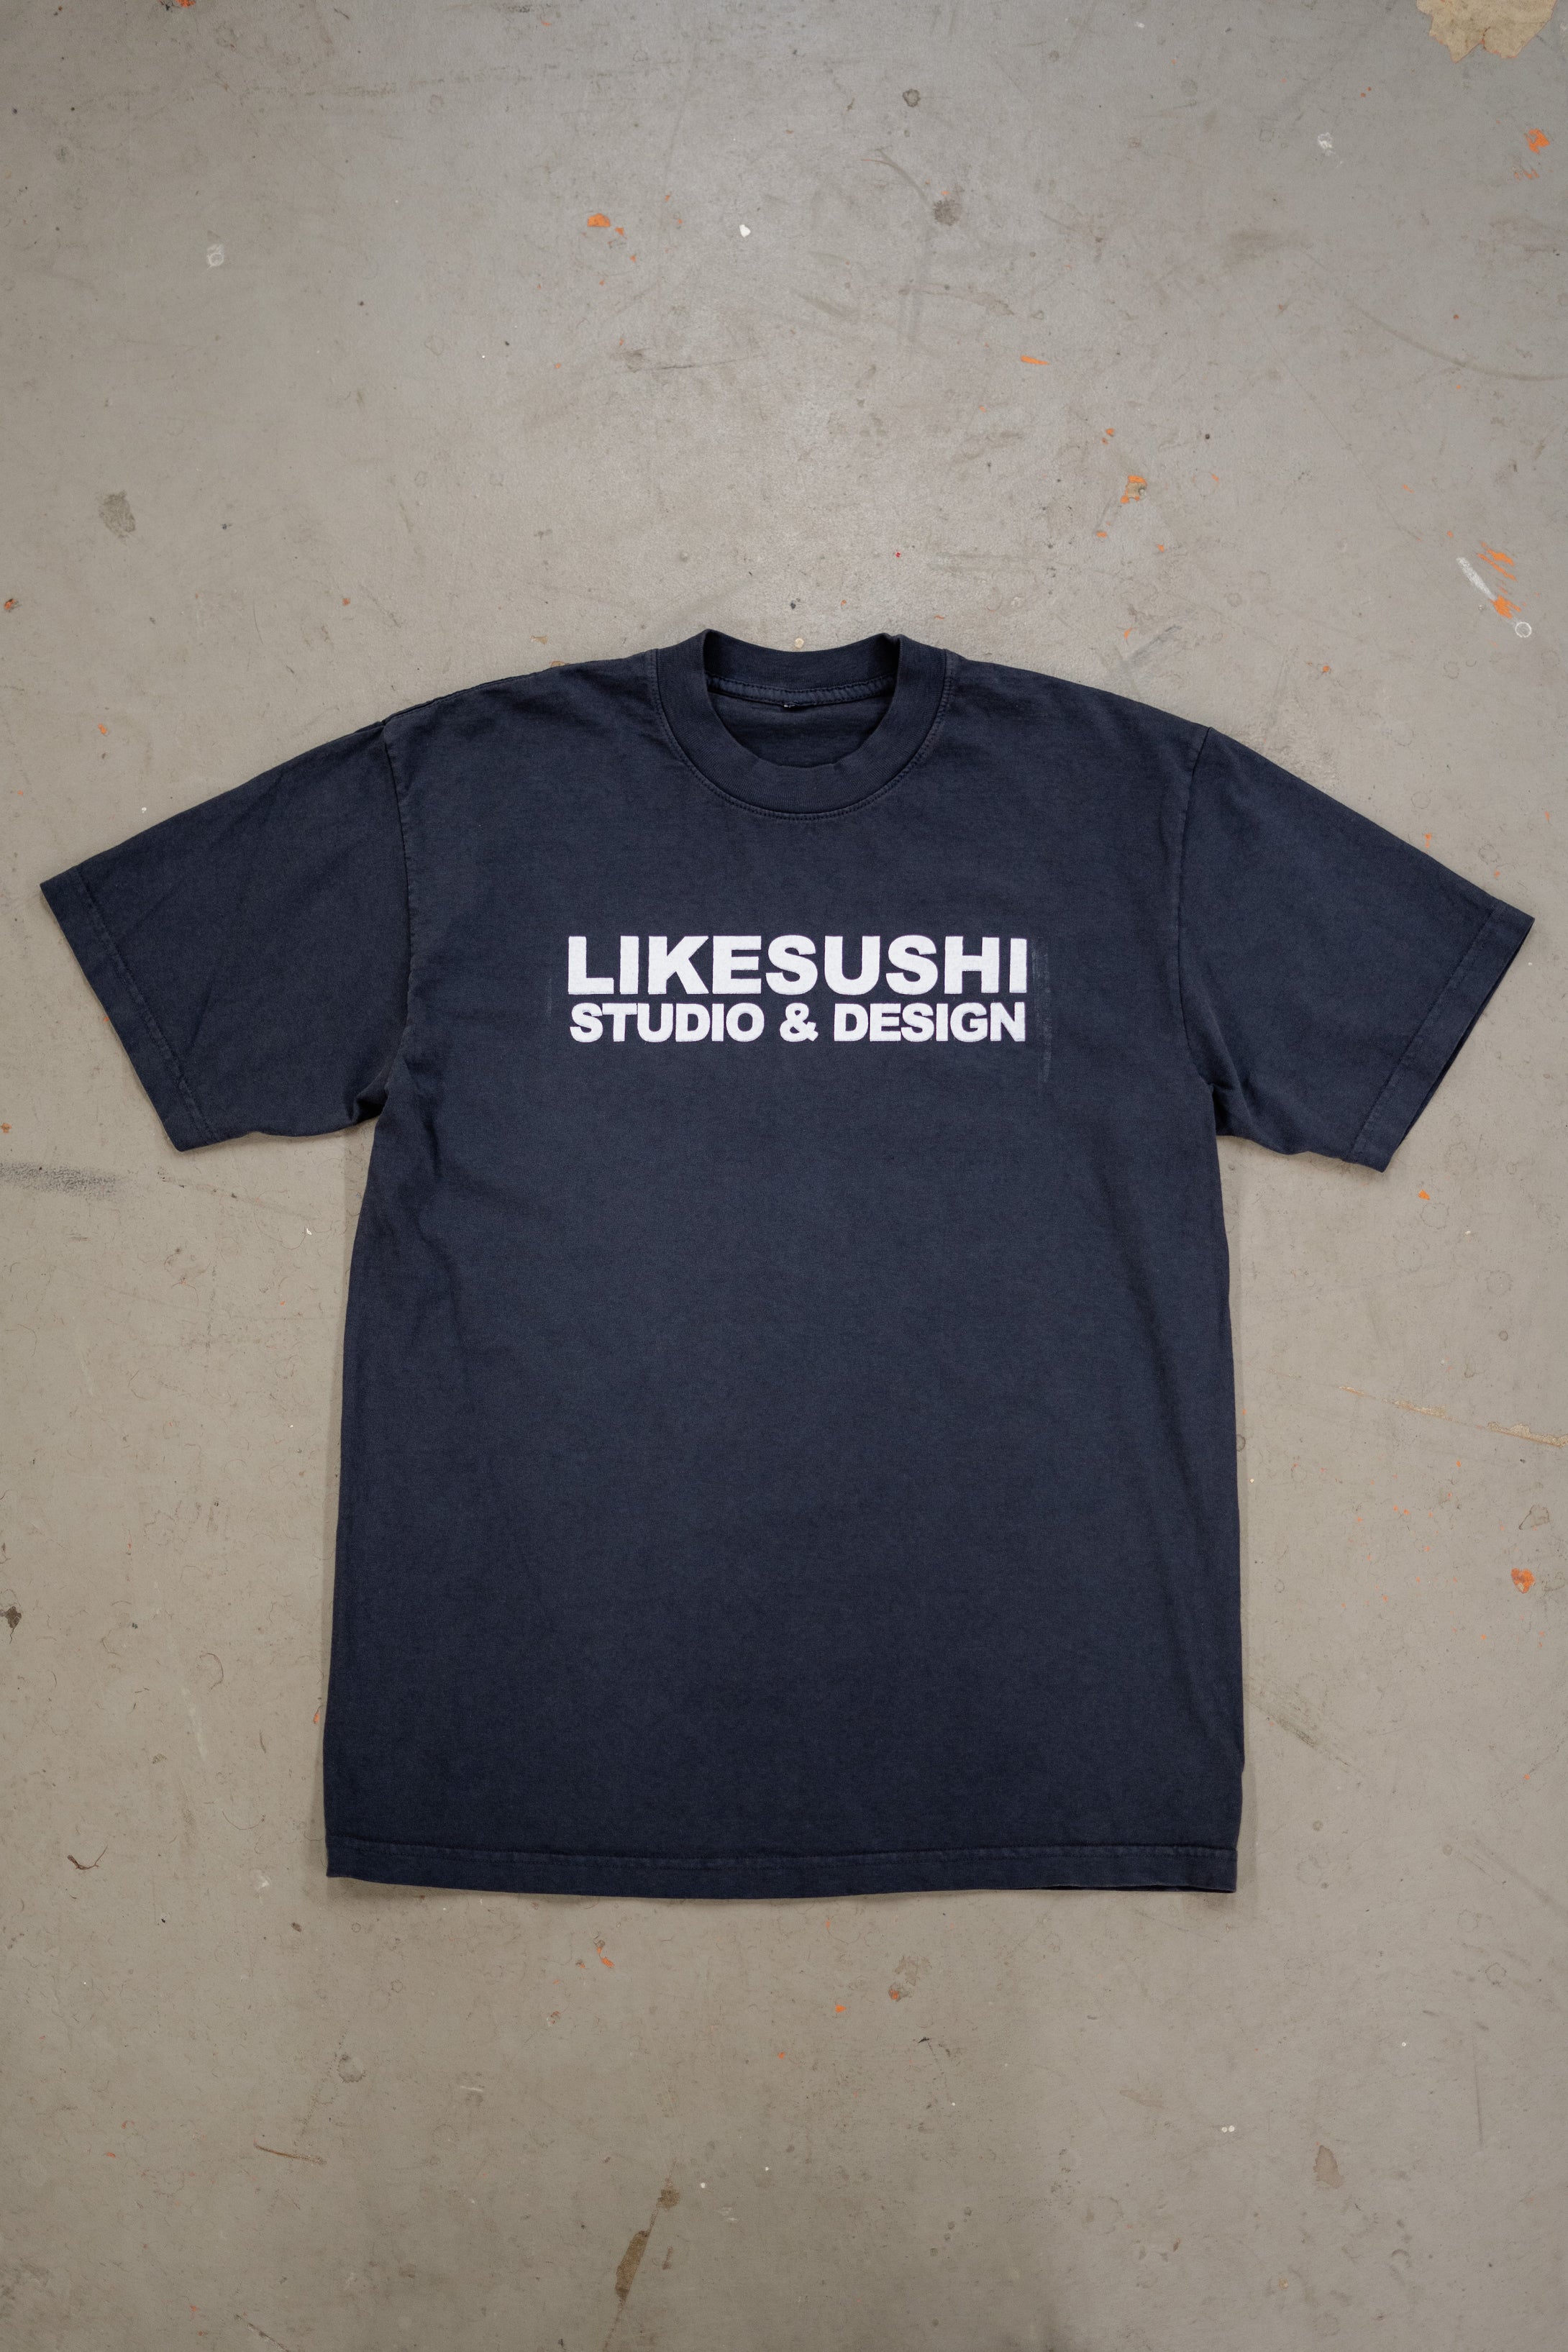 Studio & Design T-Shirt (Throwback Blue-Black) - likesushi